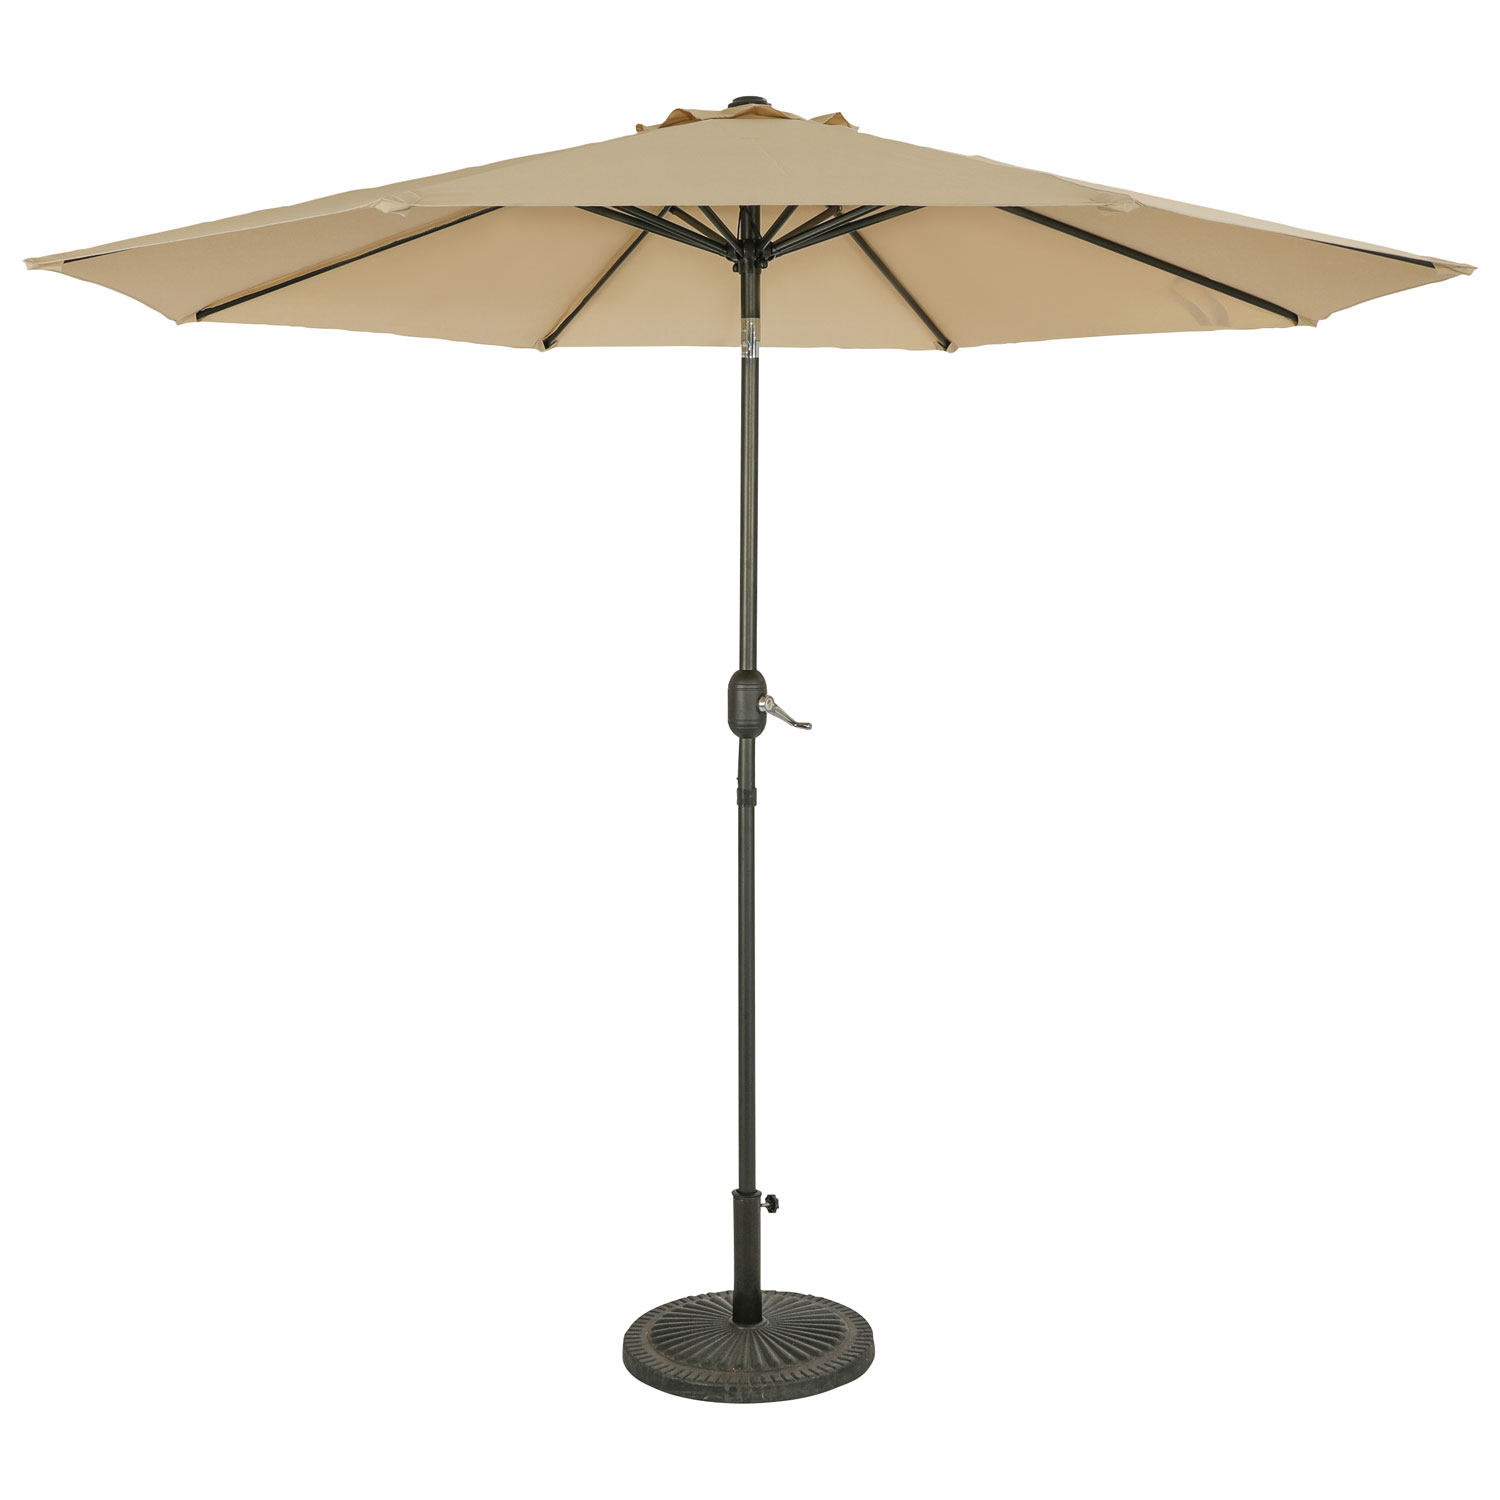 Island Umbrella Trinidad II 9 ft. Octagon Patio Free-Standing Umbrella - Champagne